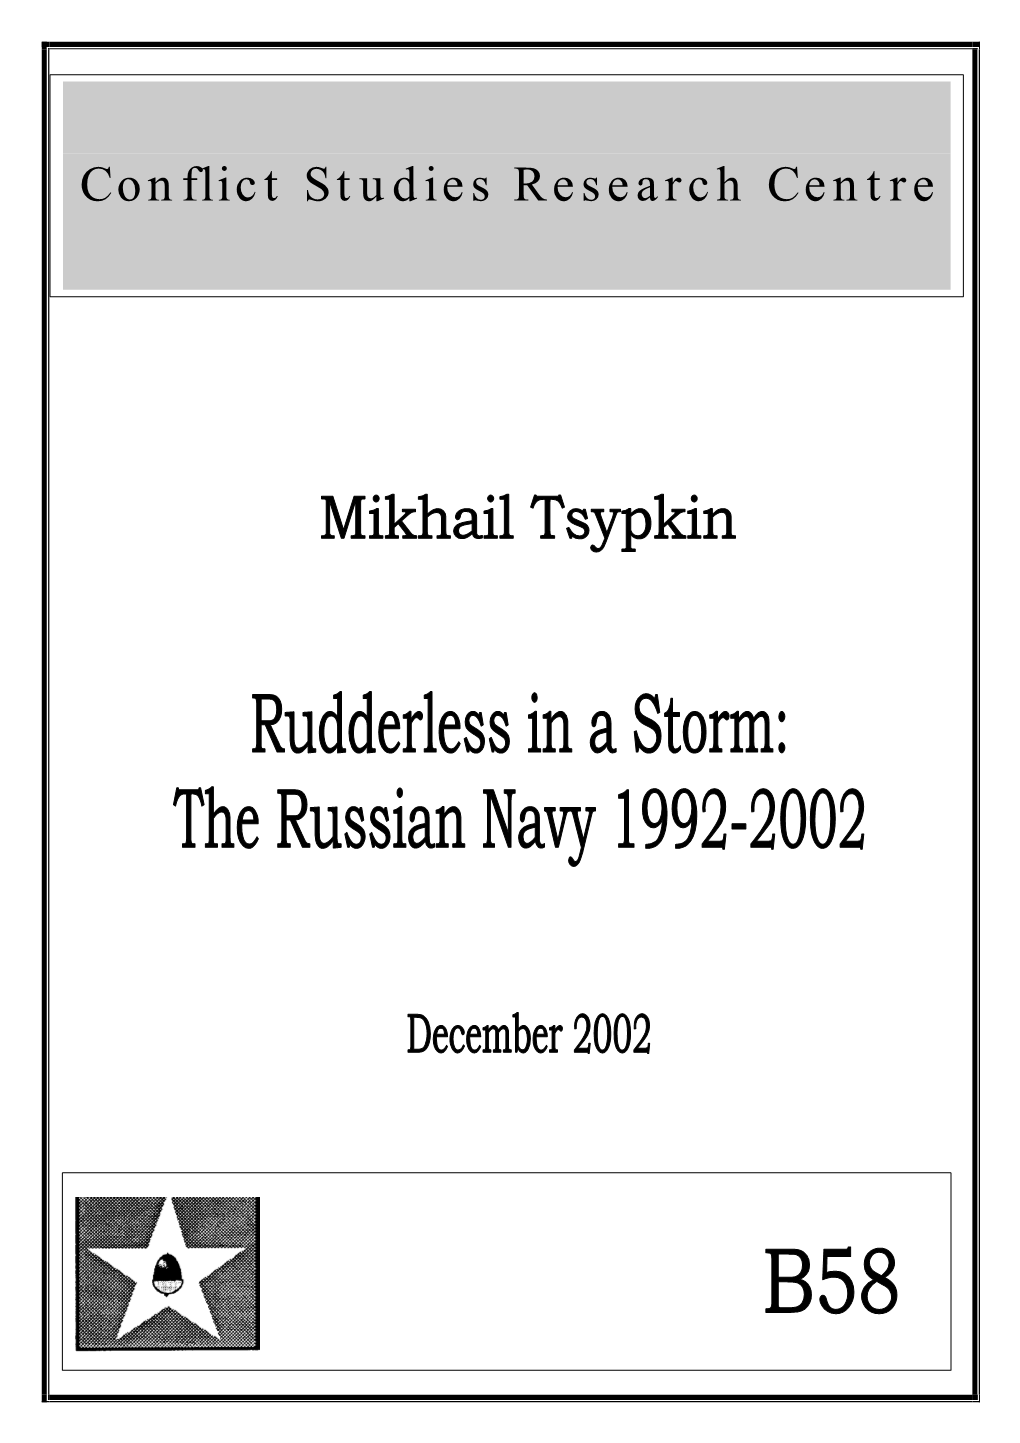 Rudderless in a Storm: the Russian Navy 1992-2002